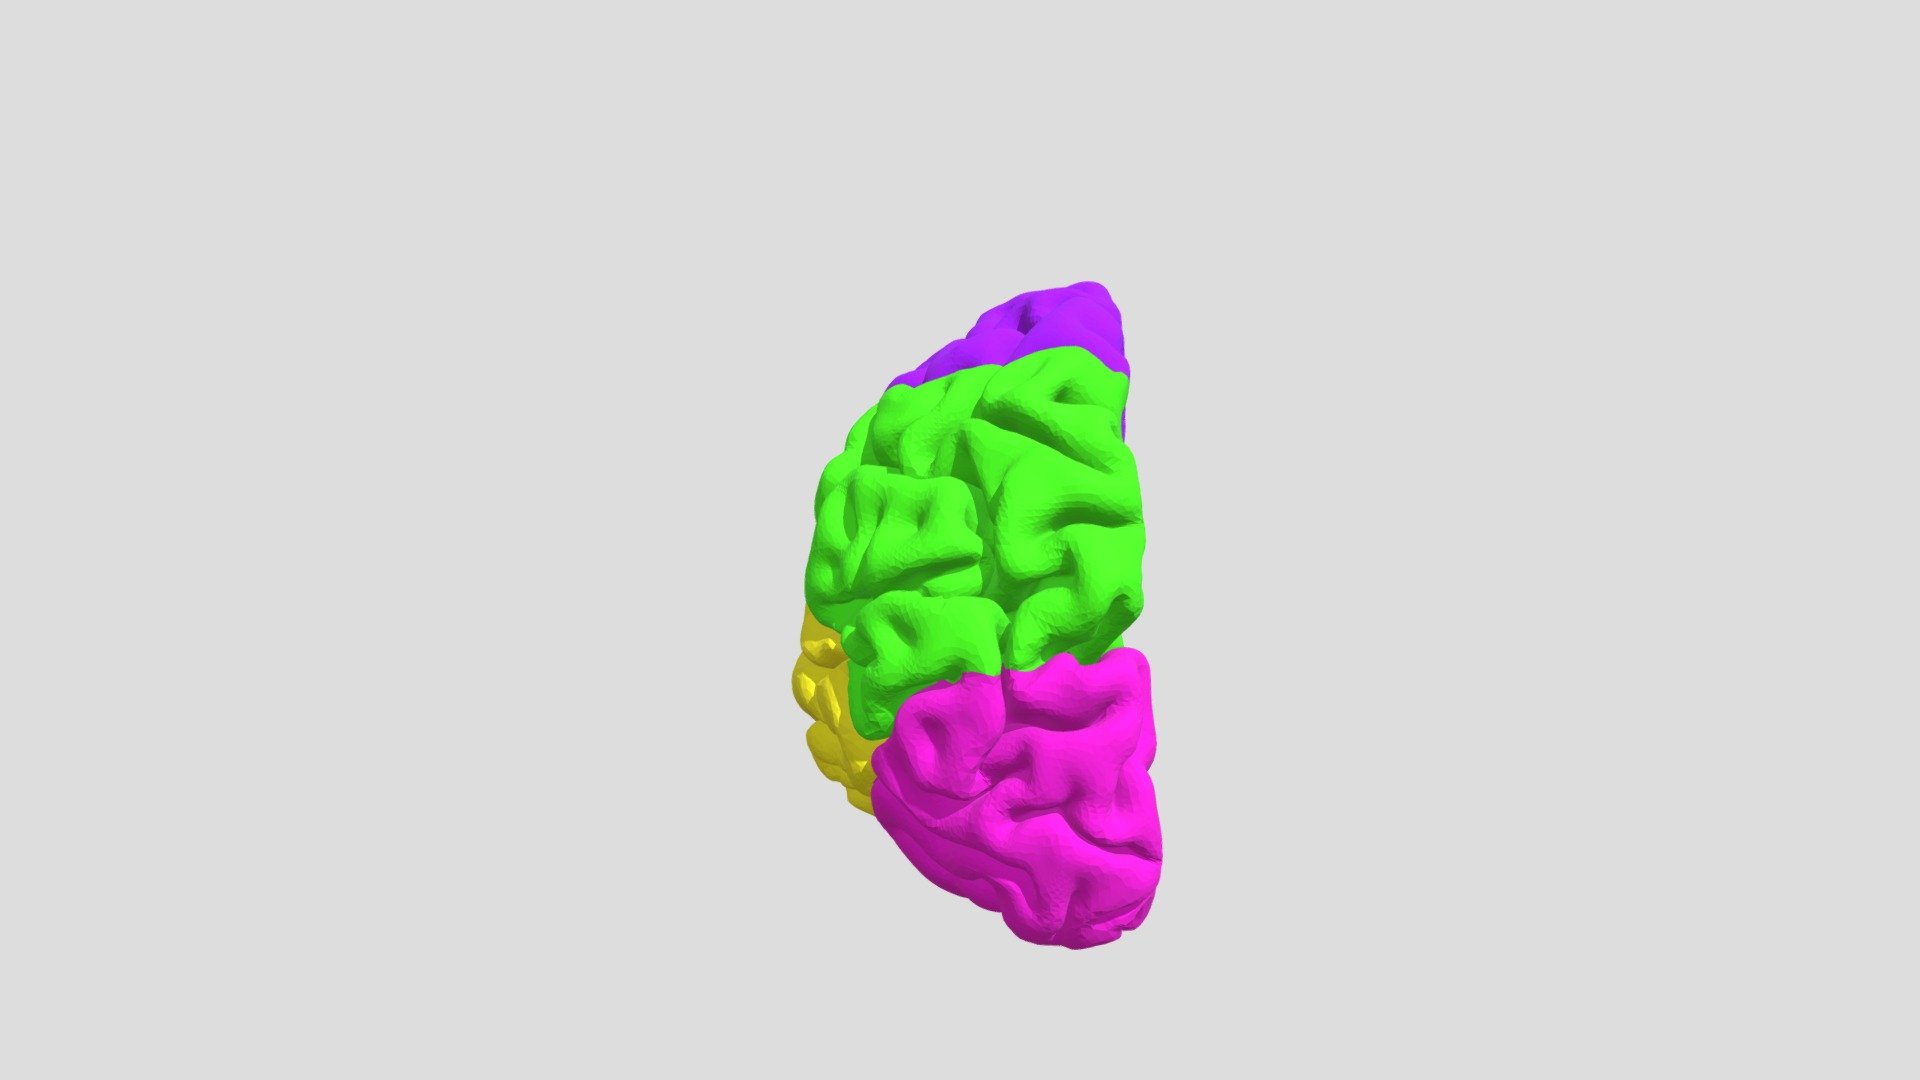 Yellow Human Brain Anatomical Model 3d Stock Illustration 1222900168